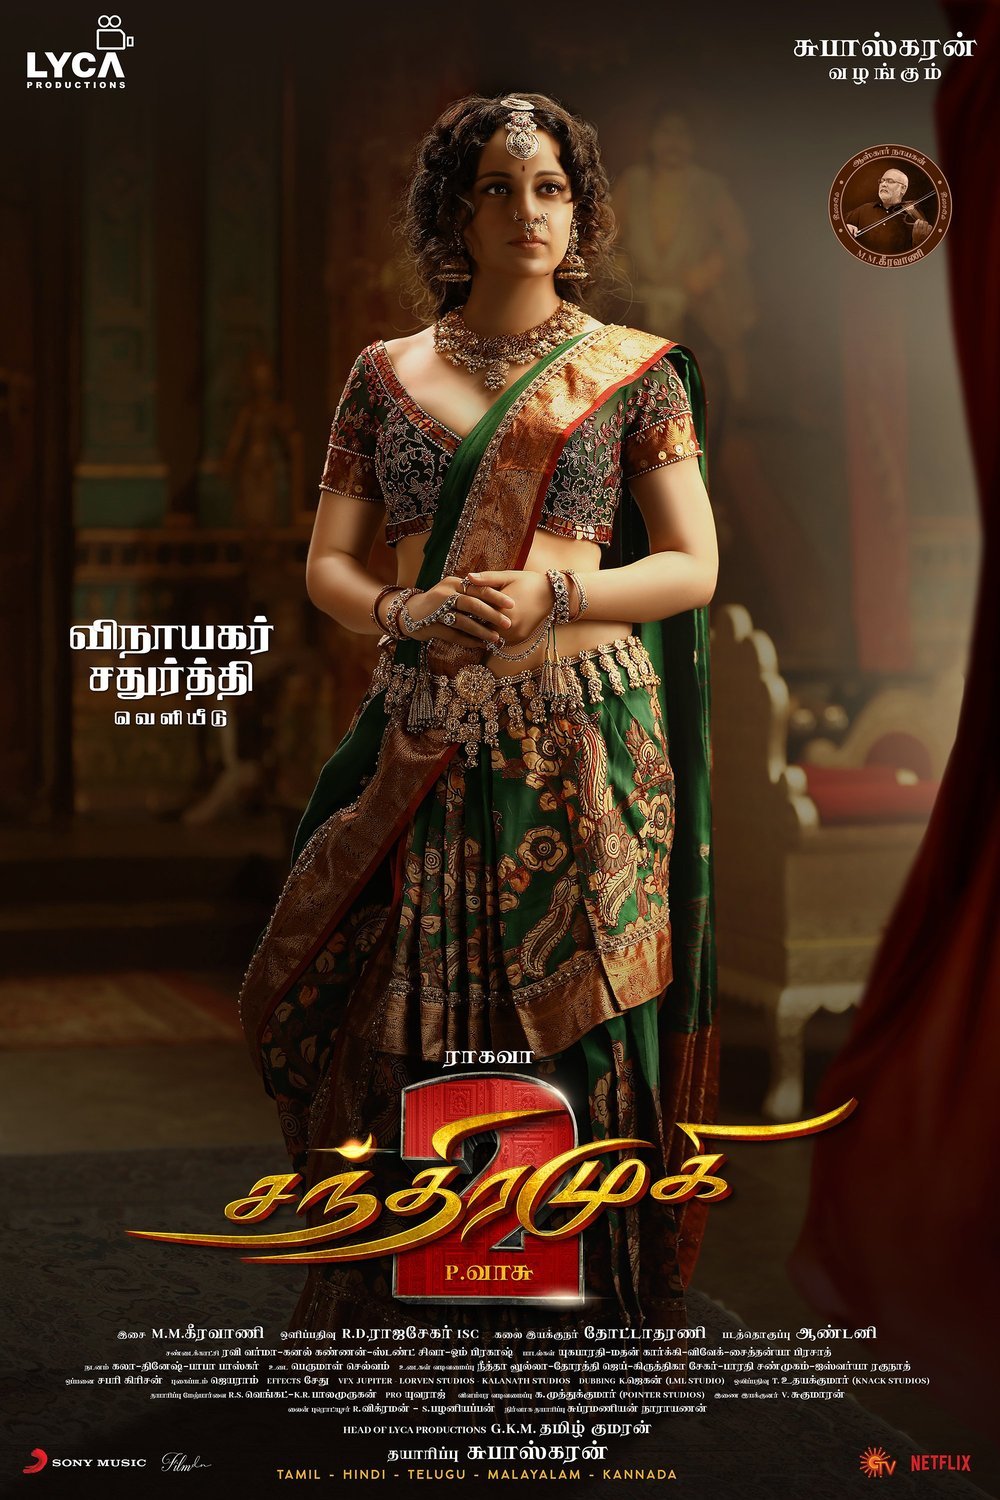 Tamil poster of the movie Chandramukhi 2